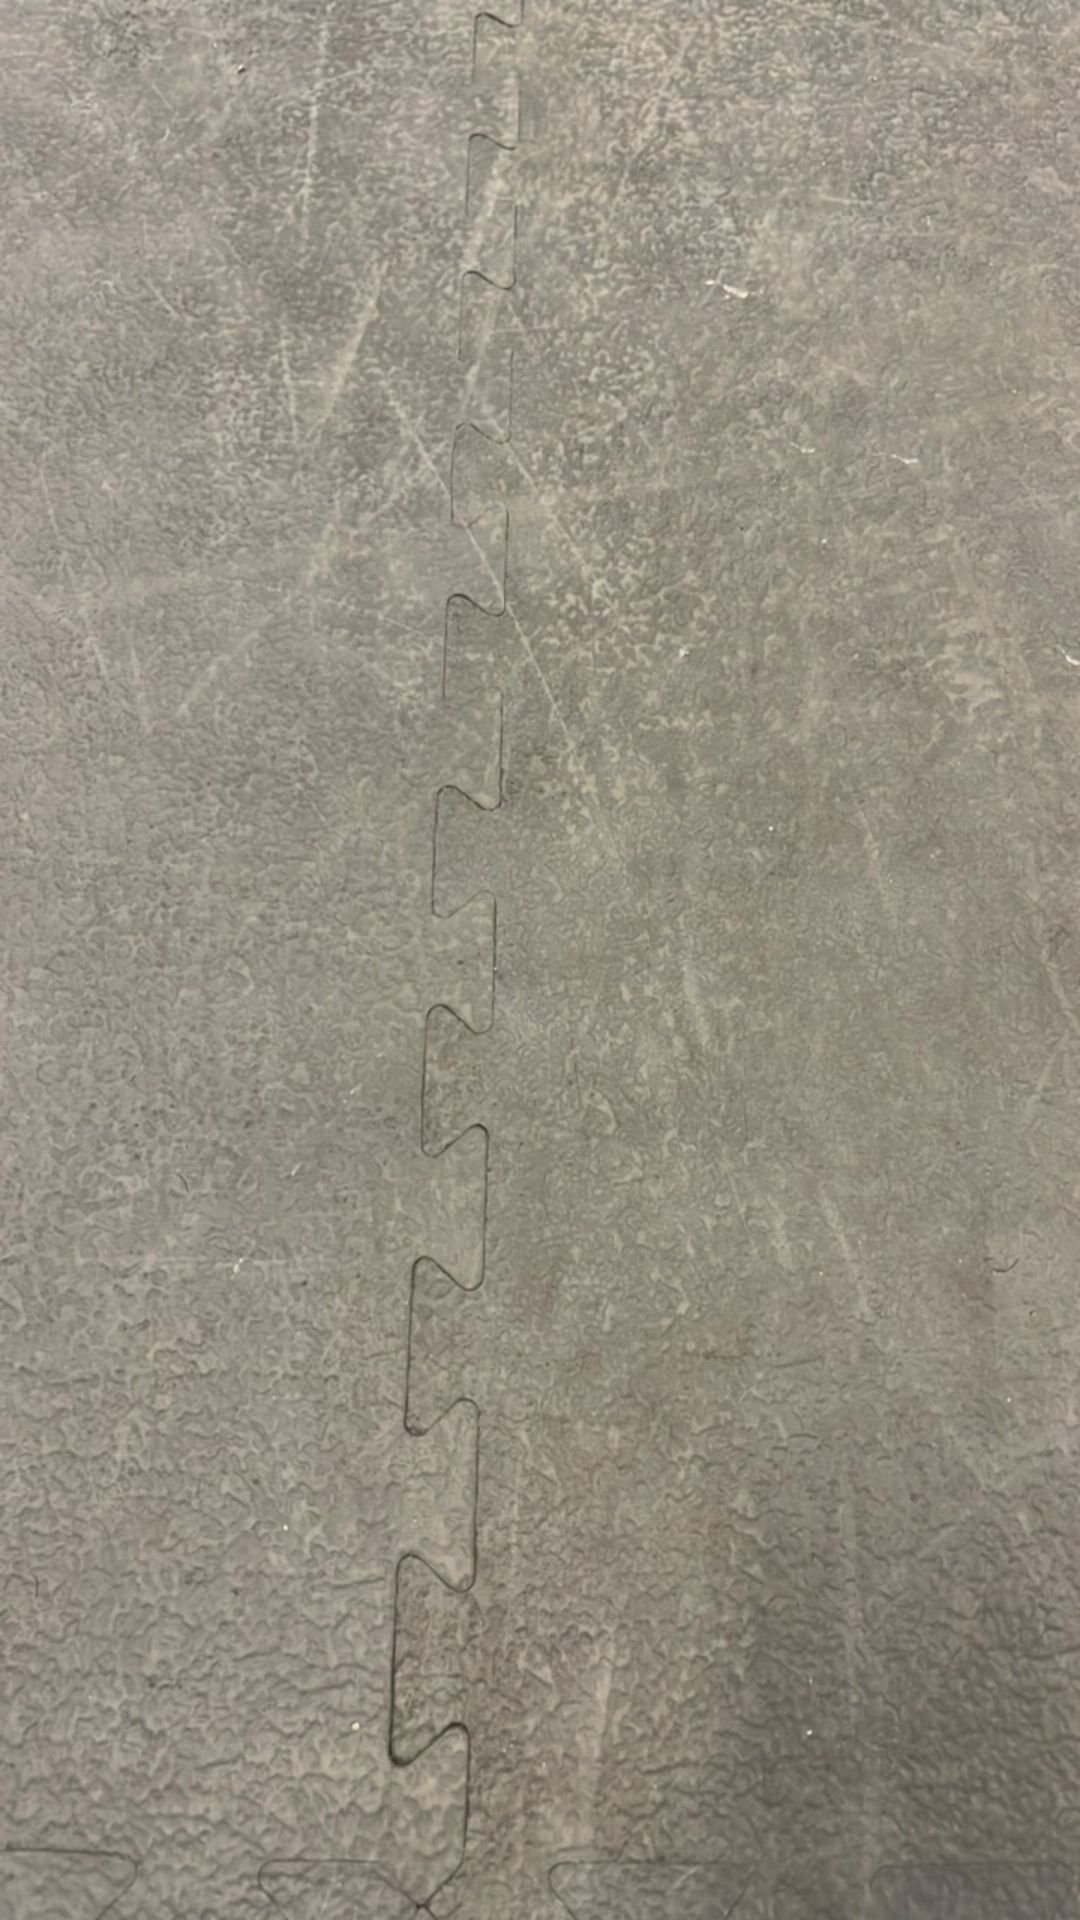 Approximately 260 Grey Interlocking Gym Floor Tiles - Image 3 of 5